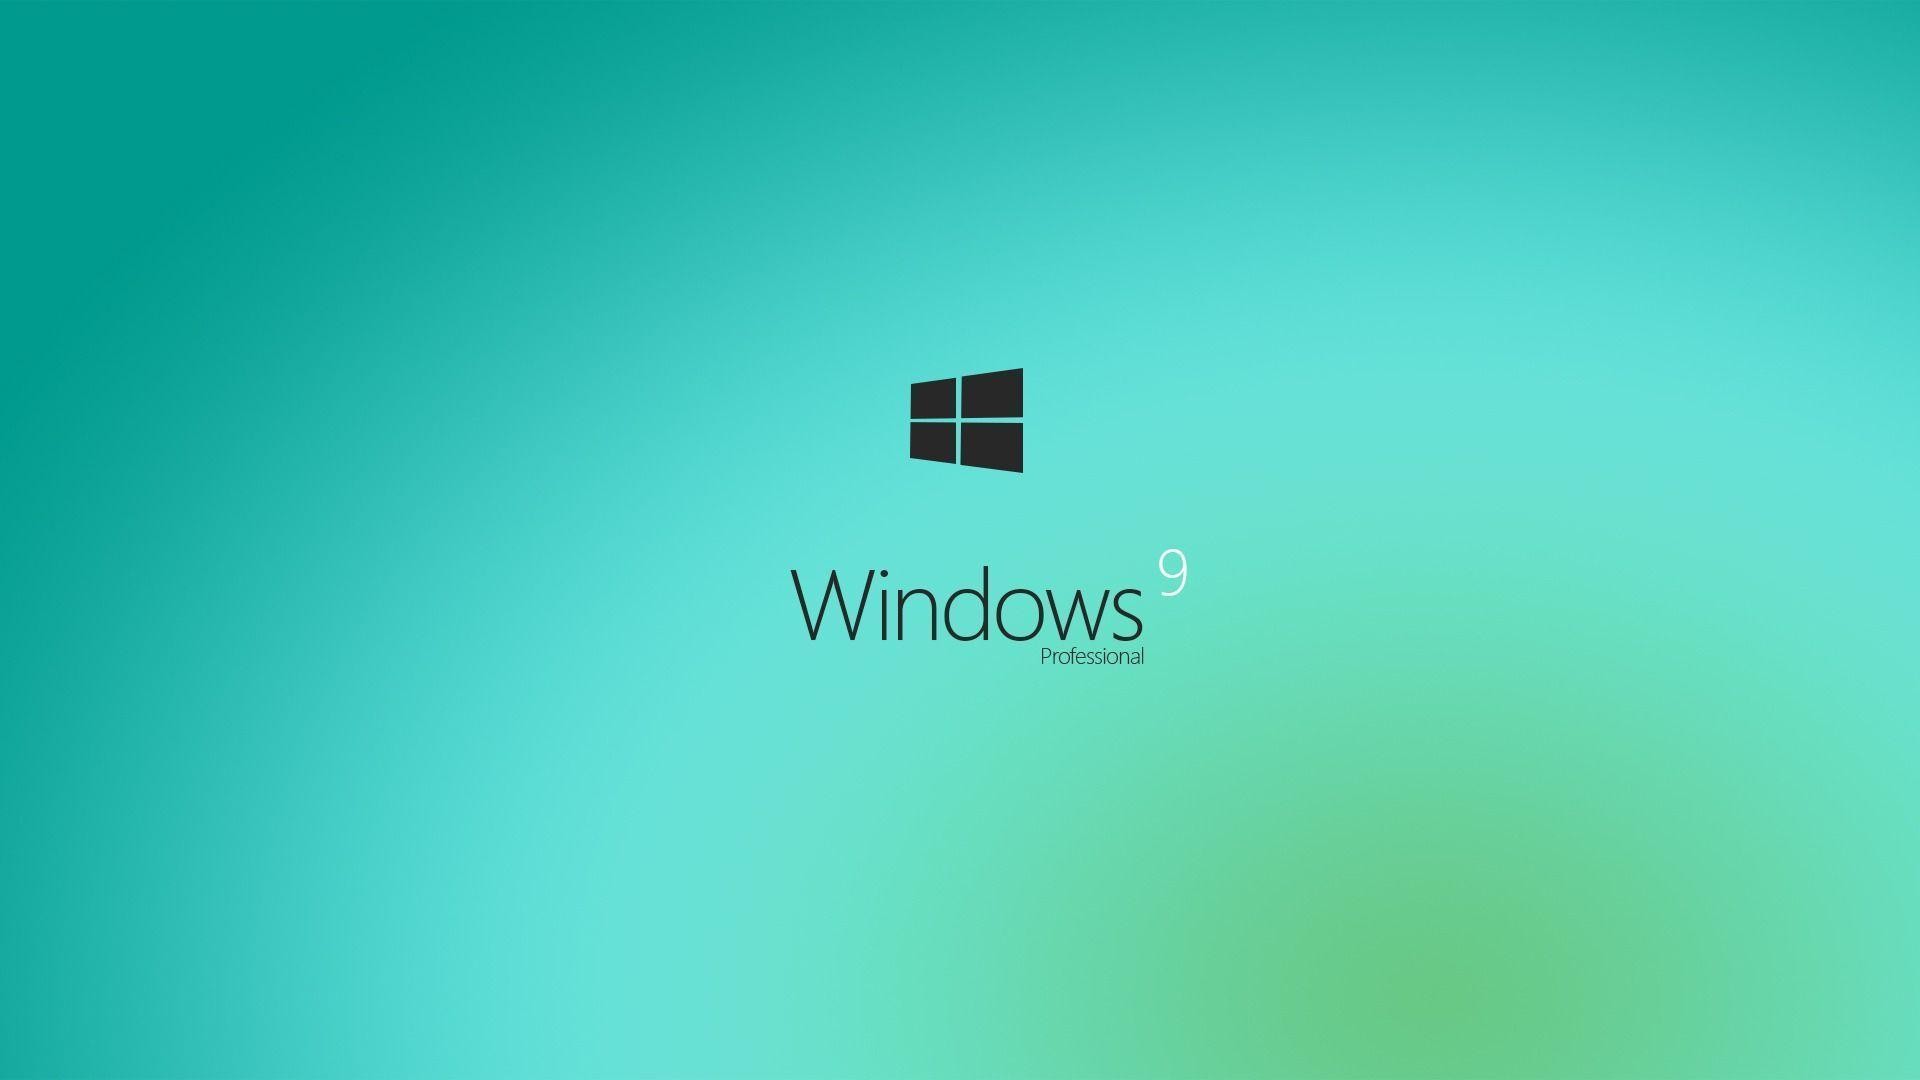 1920x1080 9 Windows 9 Wallpapers | Windows 9 Backgrounds